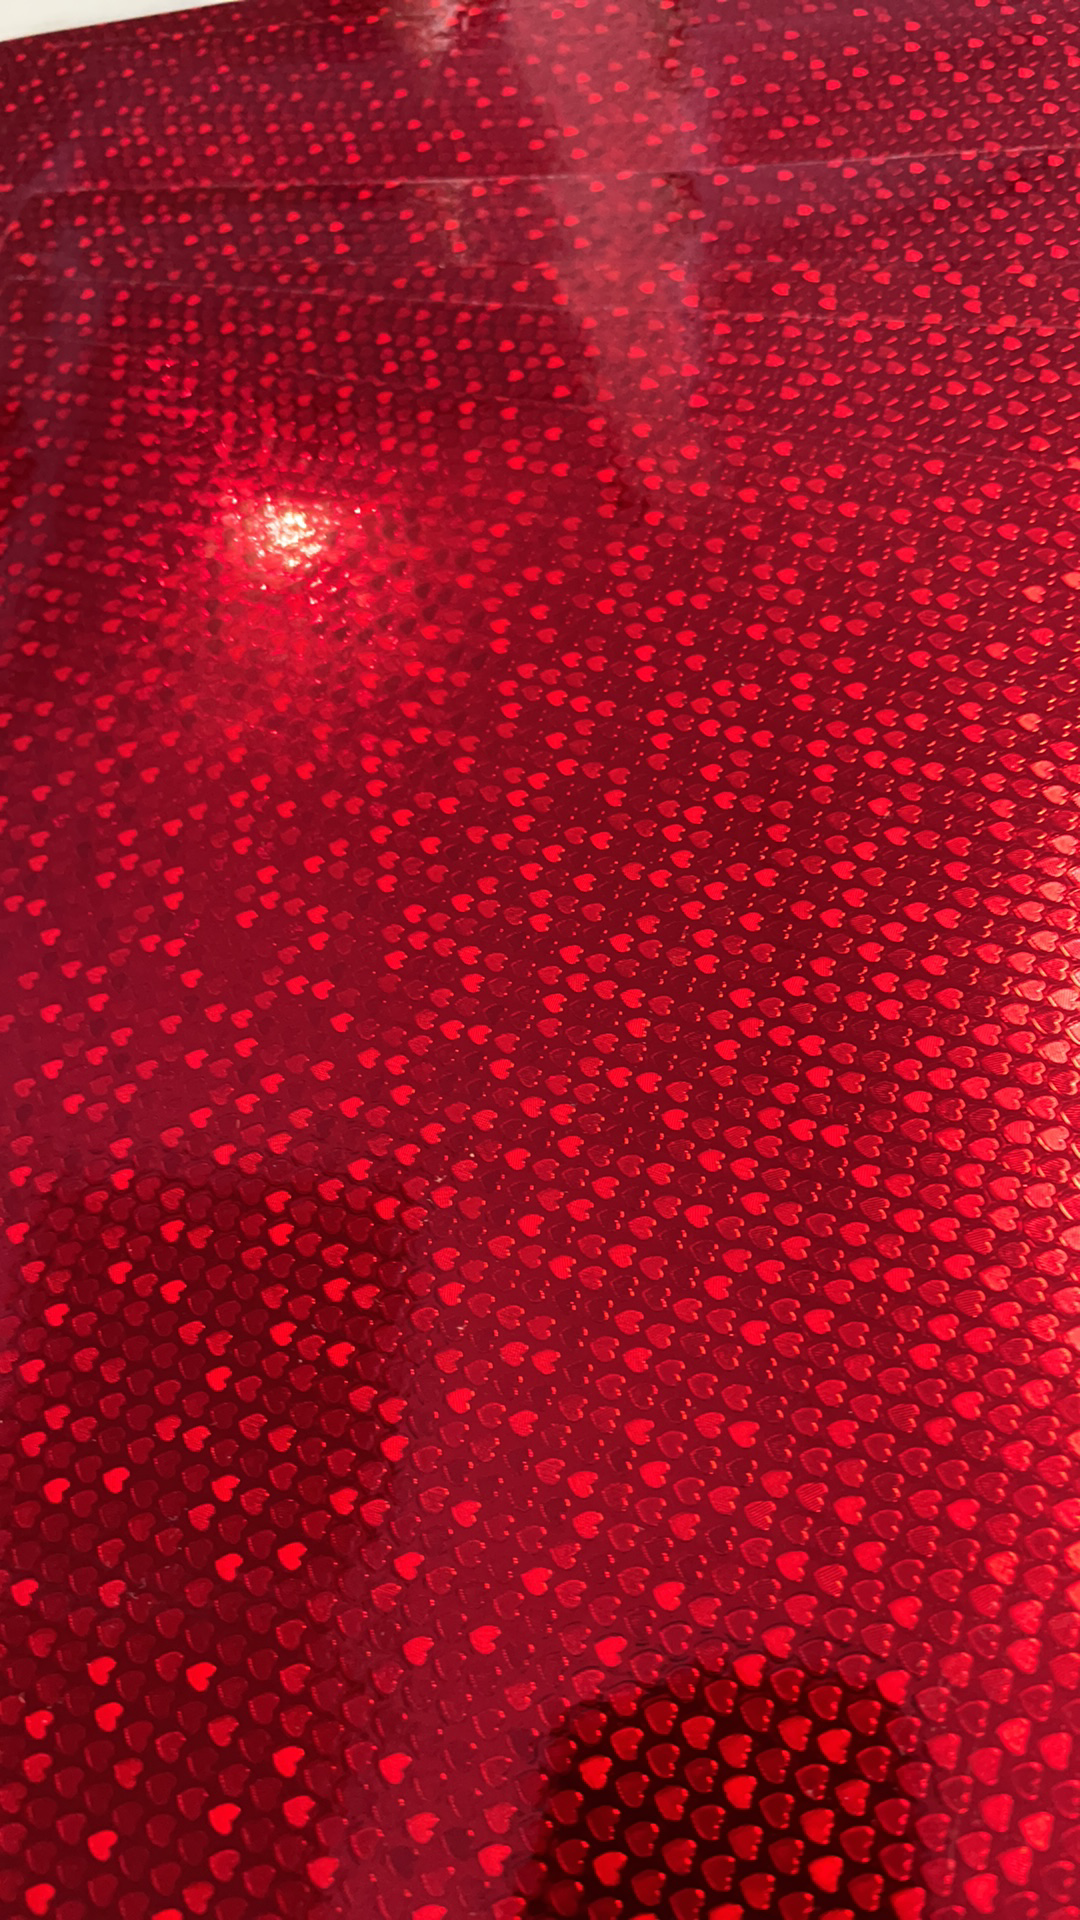 Red Twinkle Hearts - Adhesive Vinyl